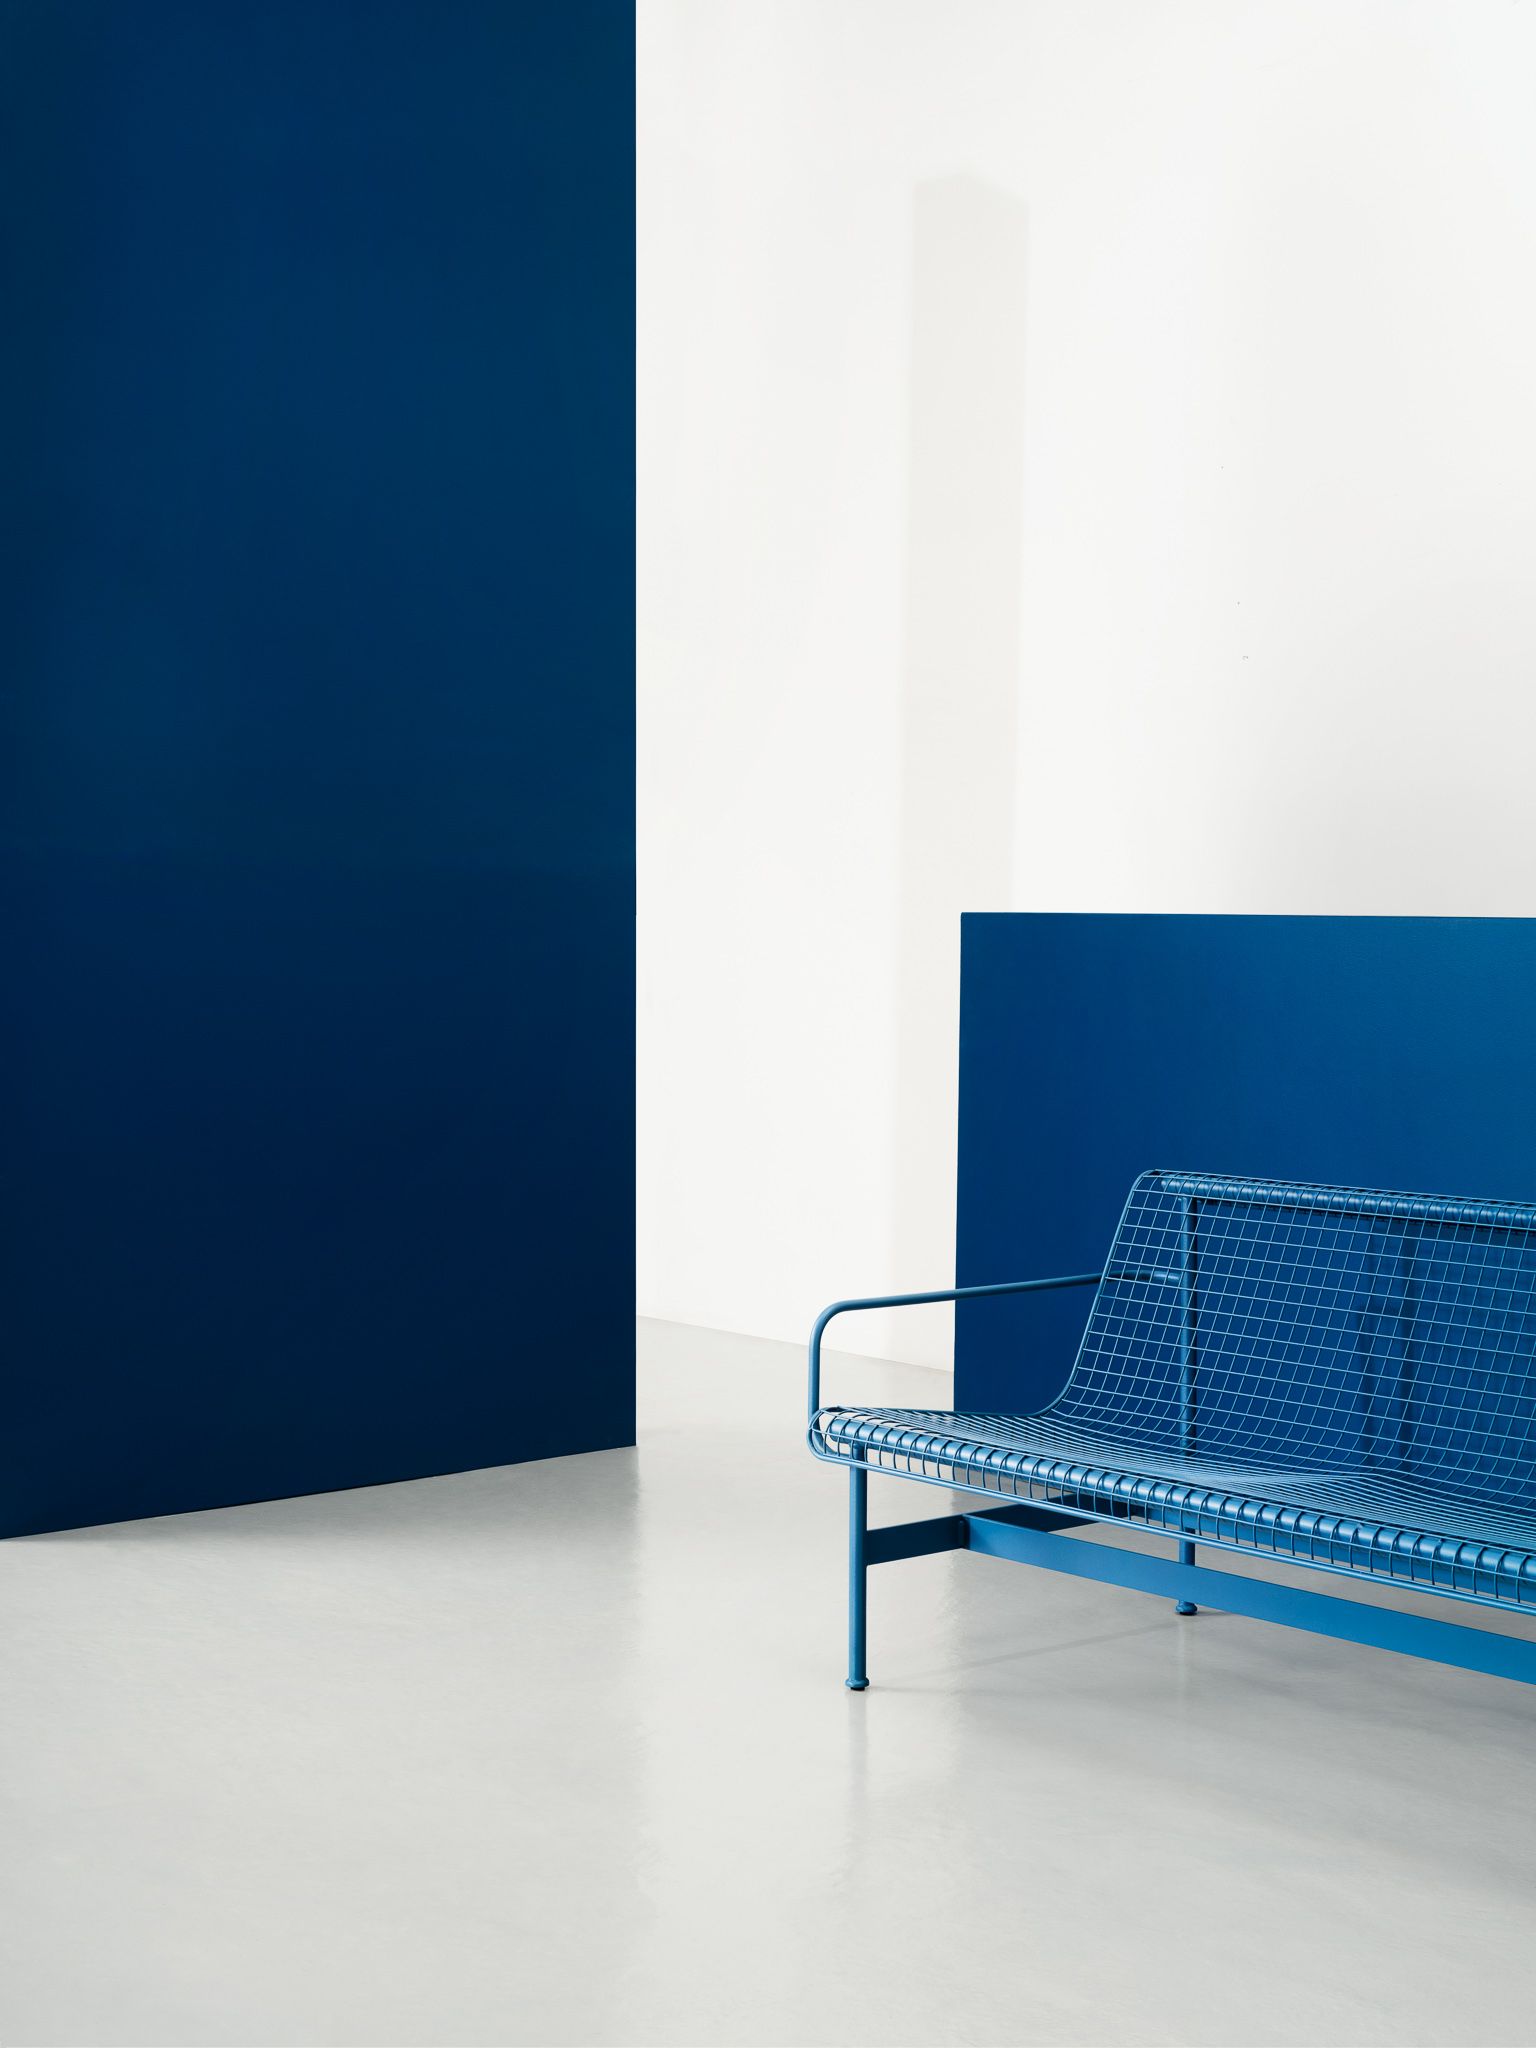 Blue steel mesh bench shot in studio, for the munch museum